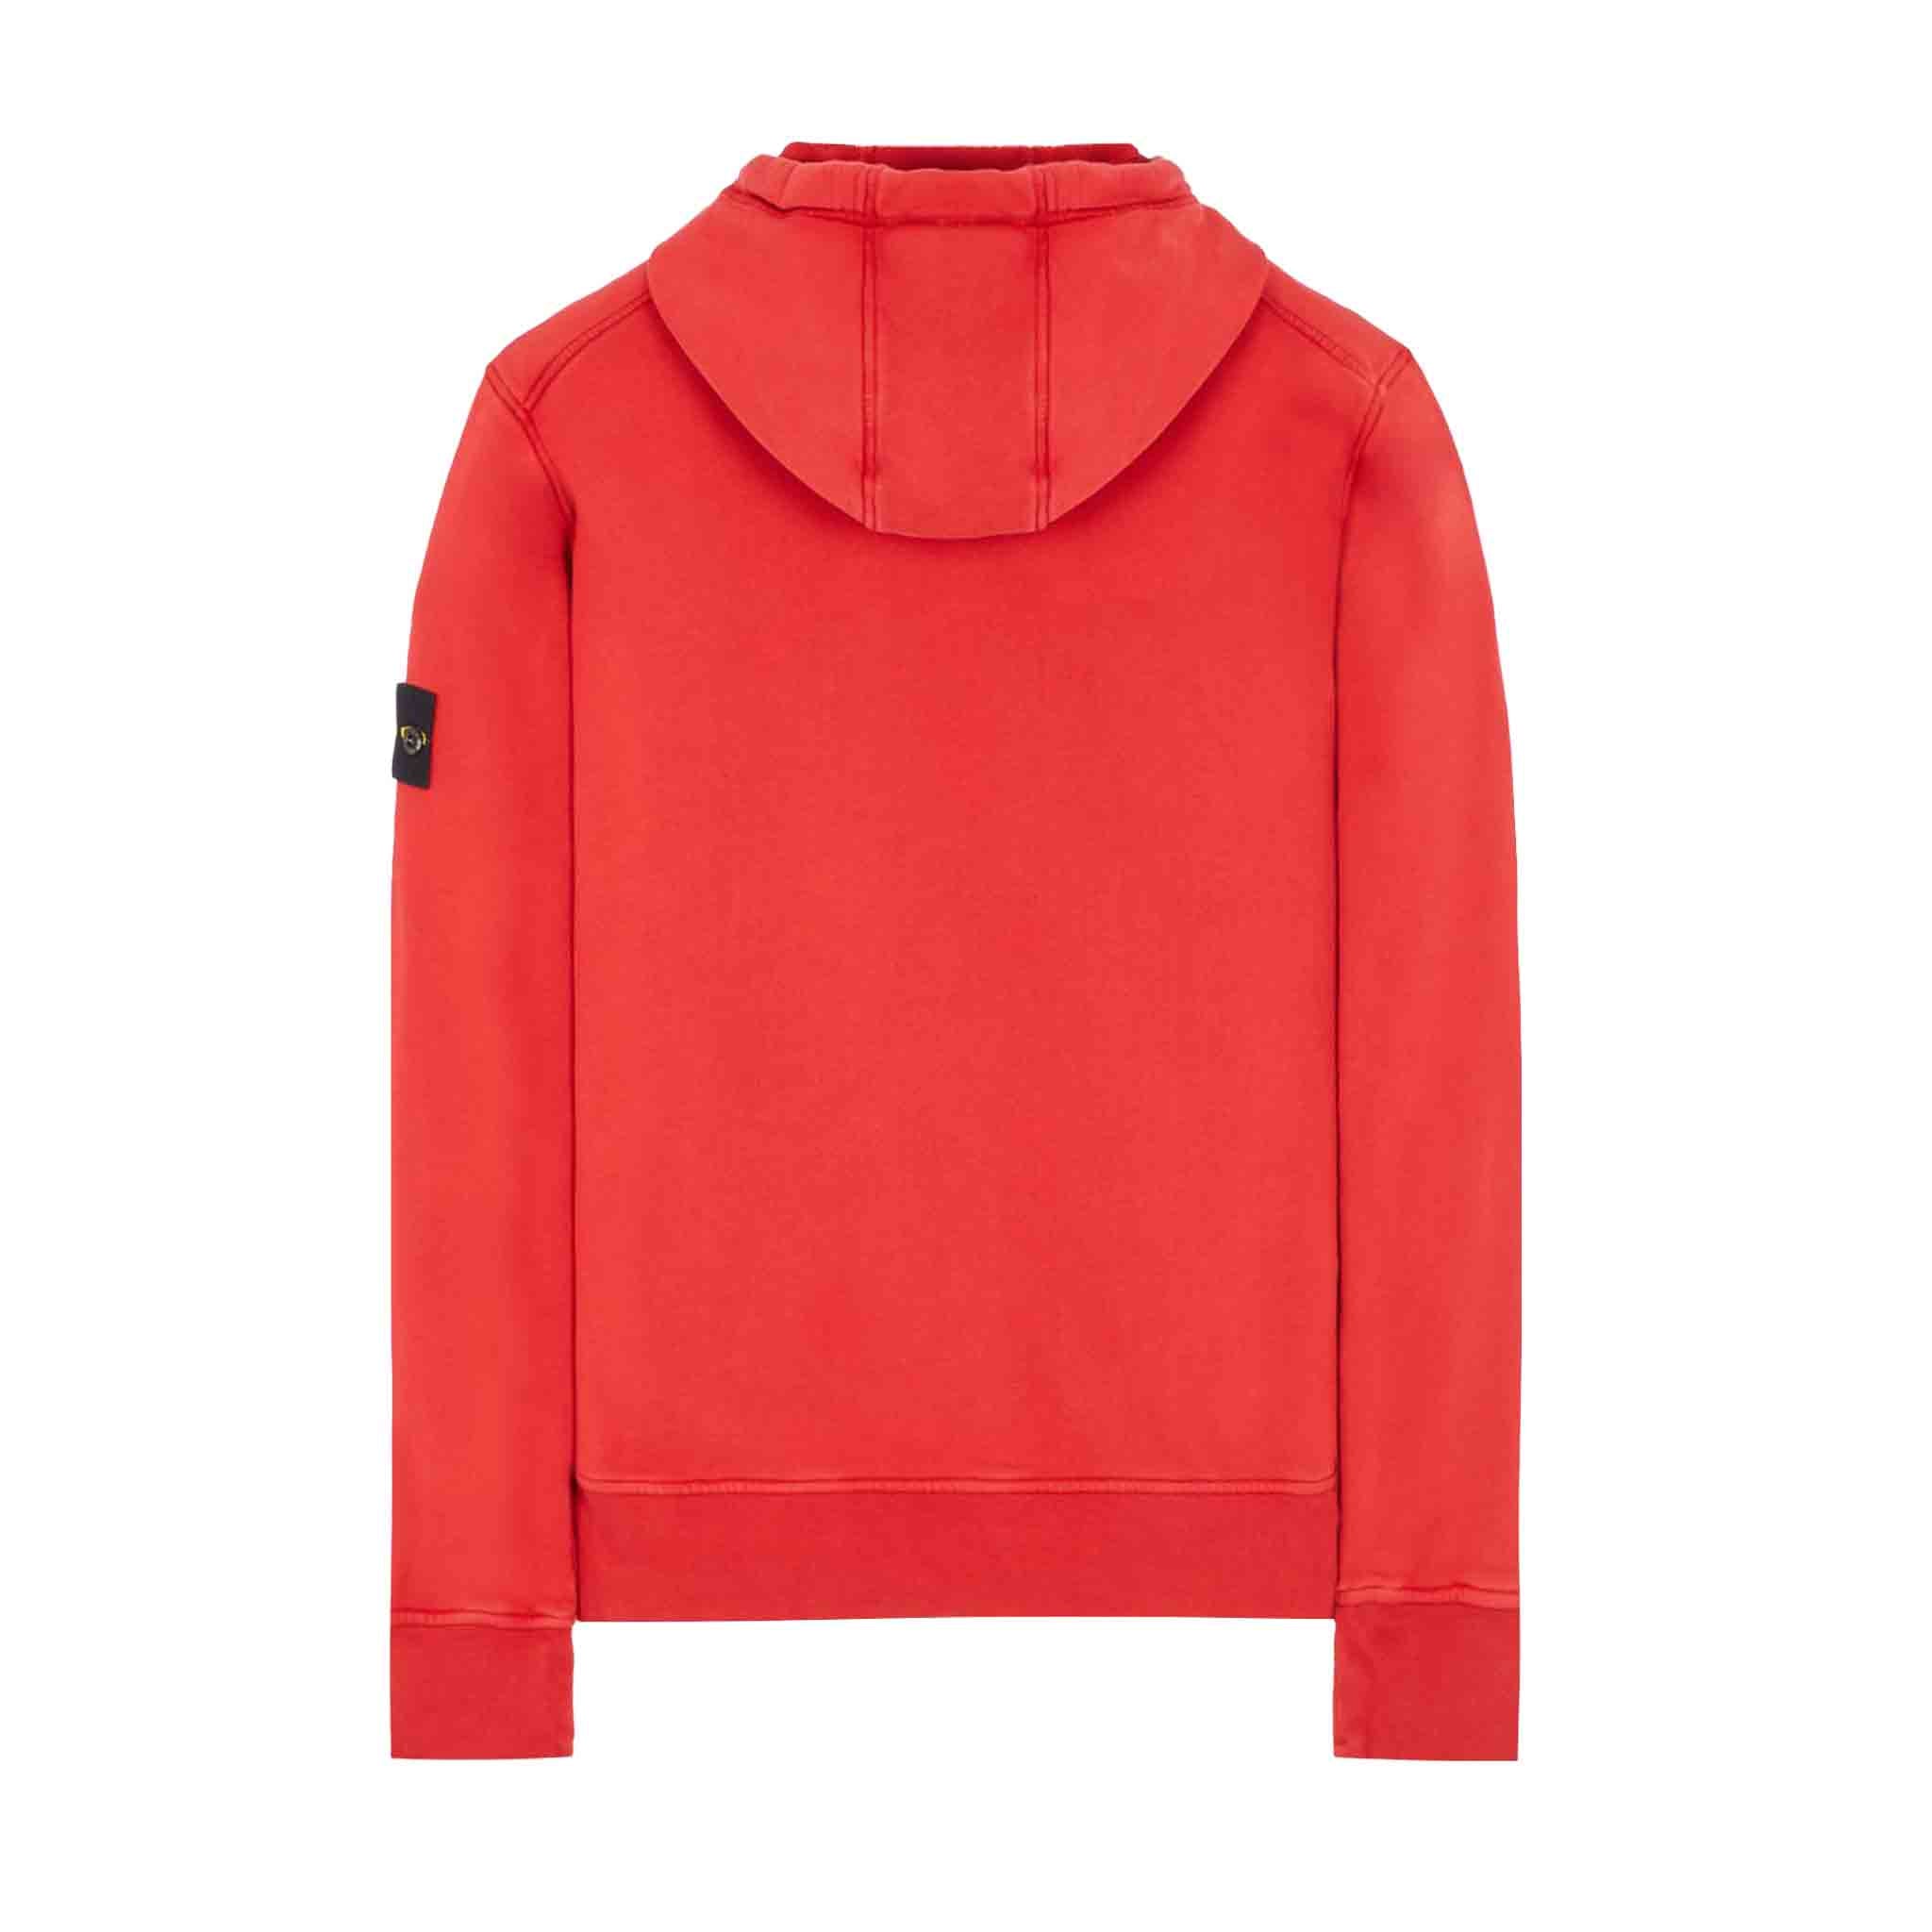 Stone Island Garment Dyed Hooded Sweatshirt in Red